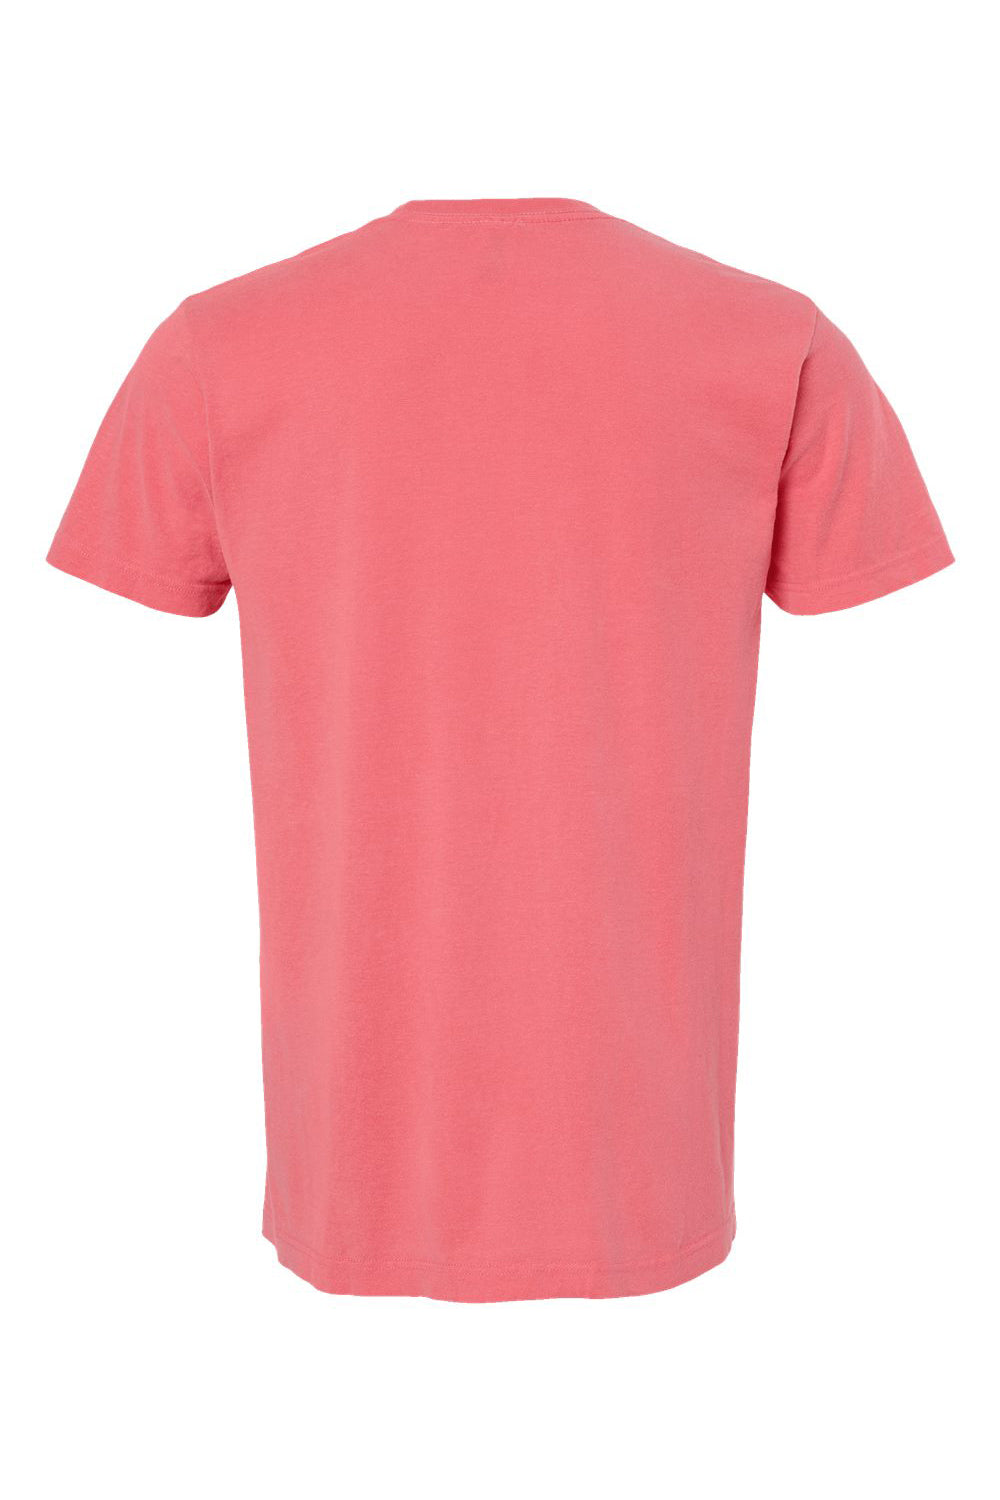 M&O 6500M Mens Vintage Garment Dyed Short Sleeve Crewneck T-Shirt Watermelon Red Flat Back